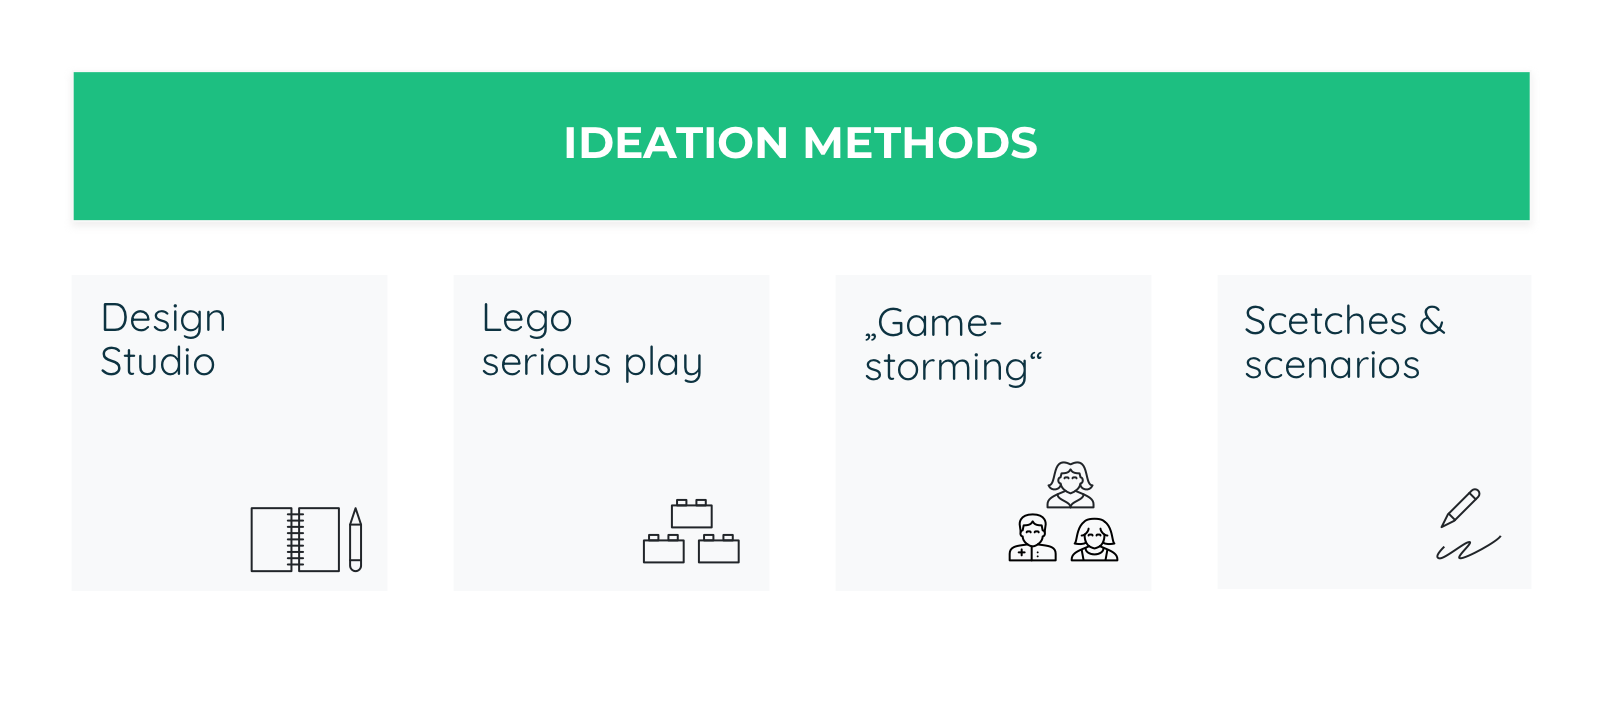 Ideation methods